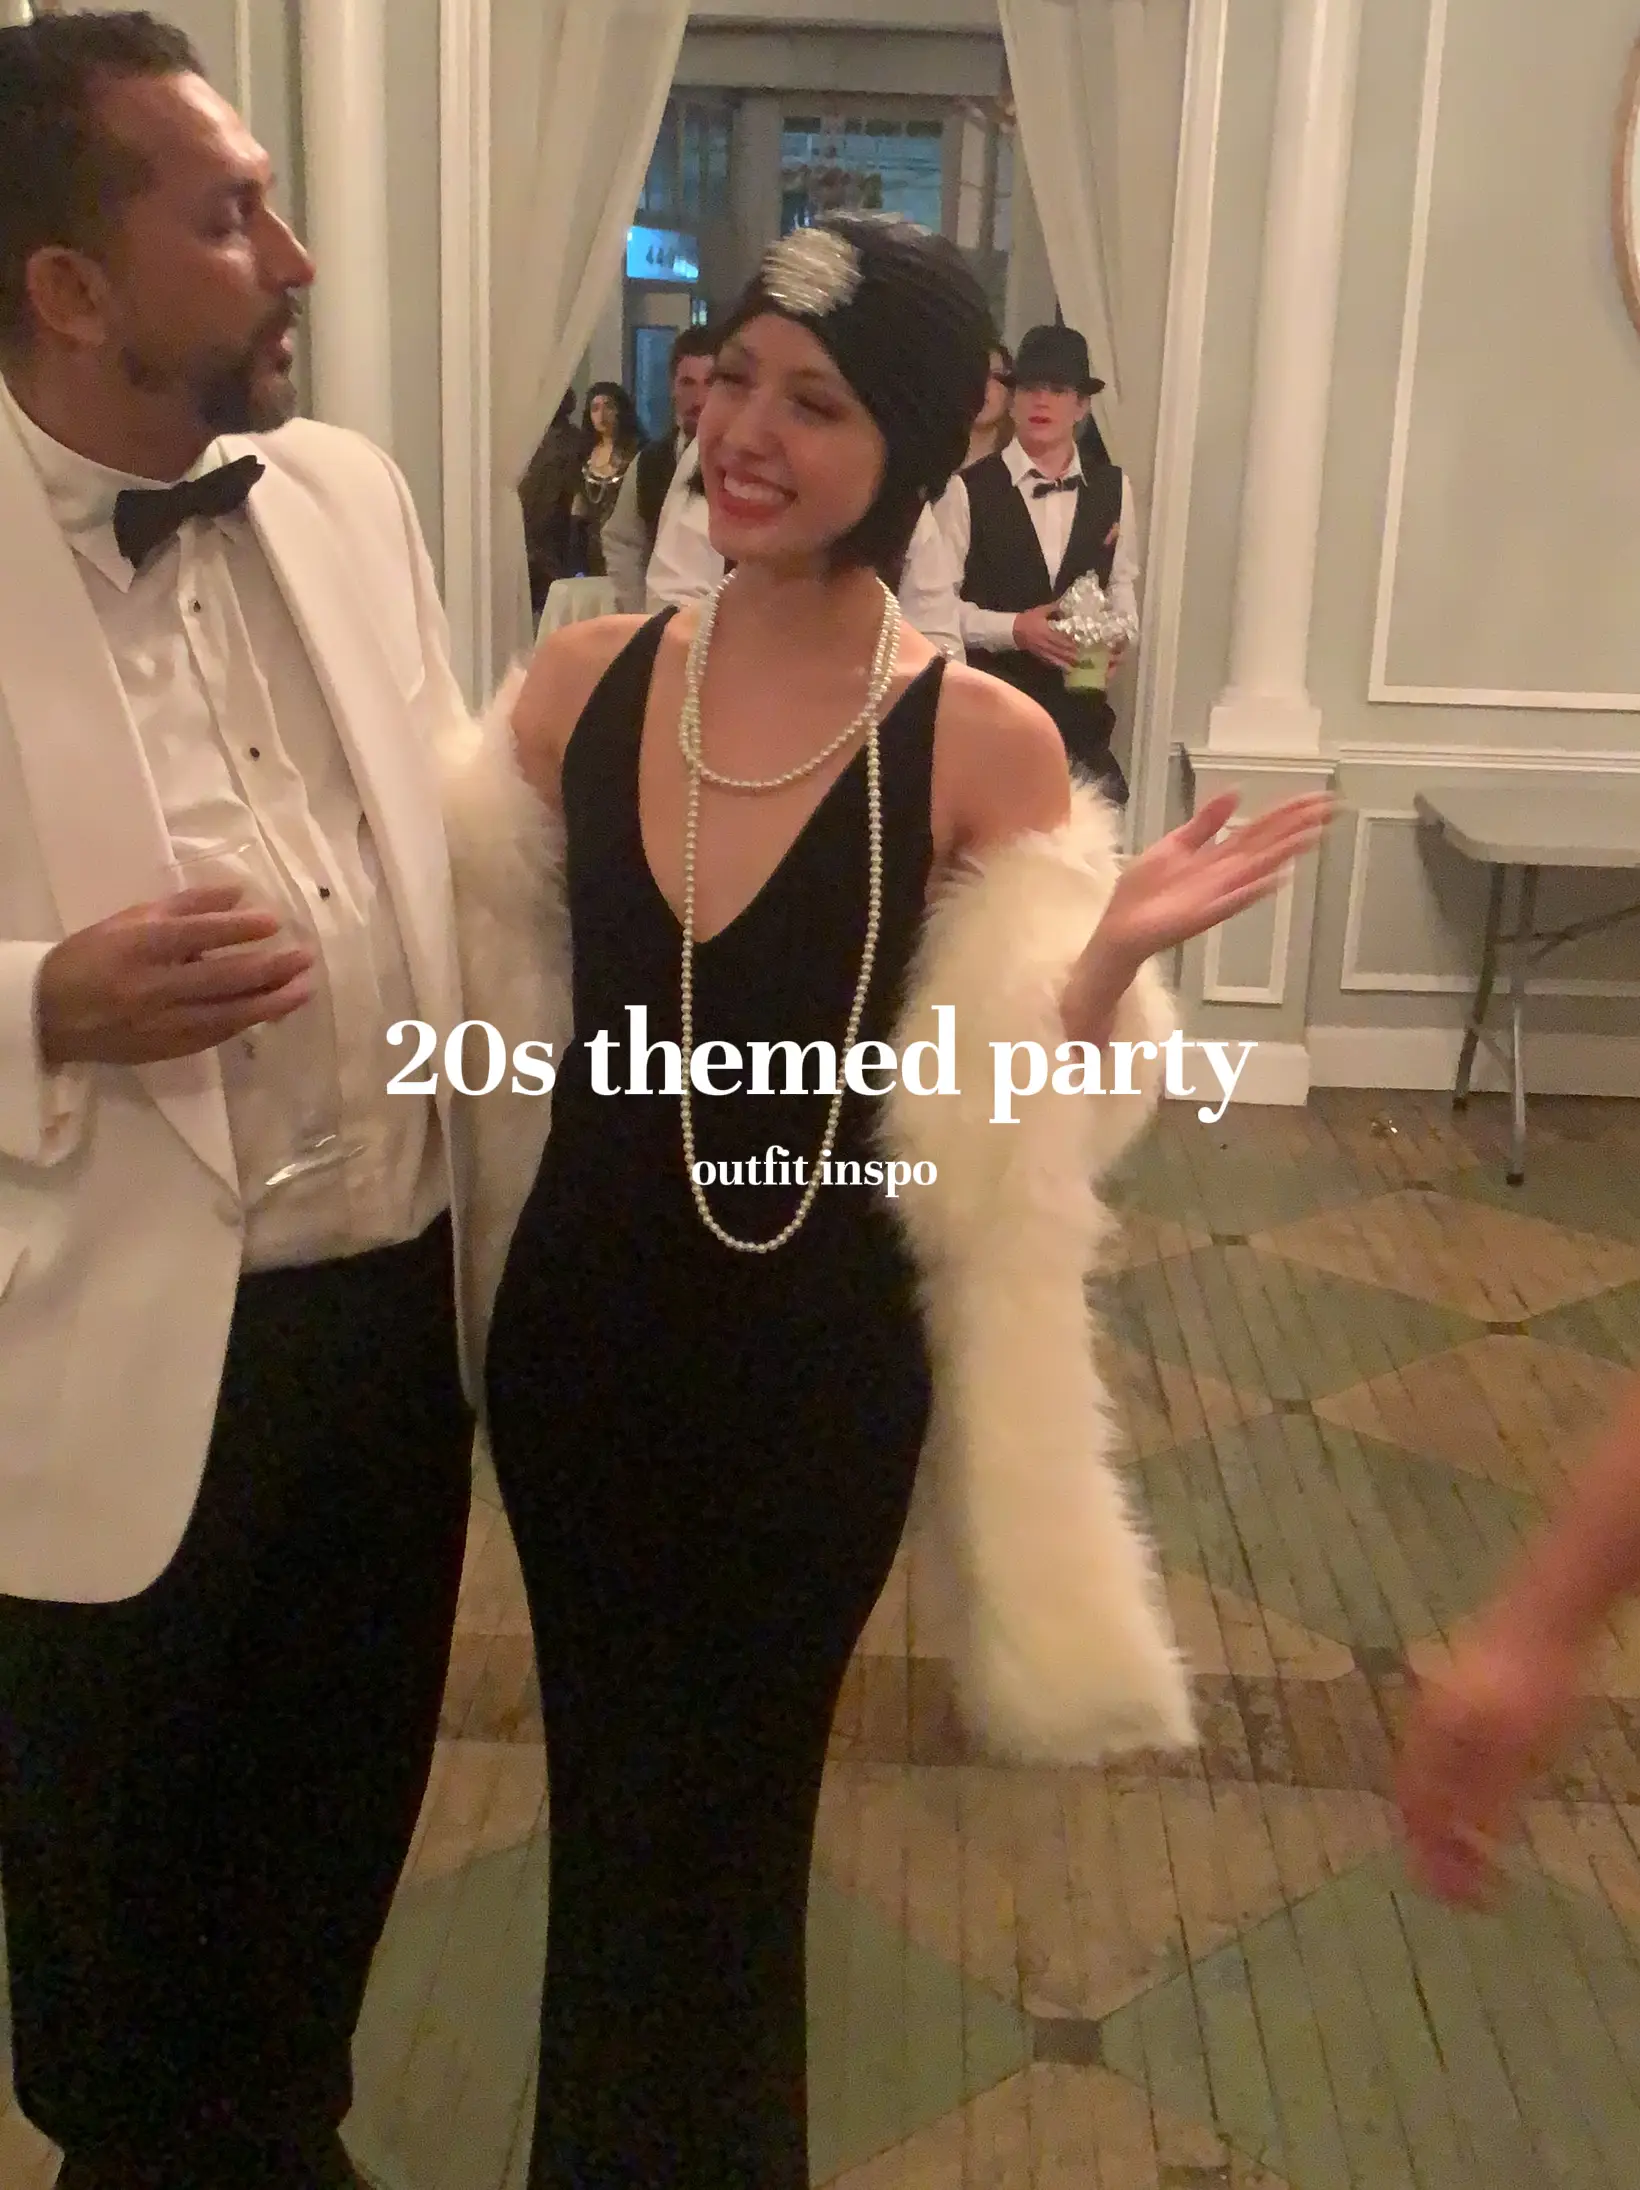 Great Gatsby Party-Roaring 20s. #Gatsby #roaring20s #party #centerpiec, Great  Gatsby Themed Party